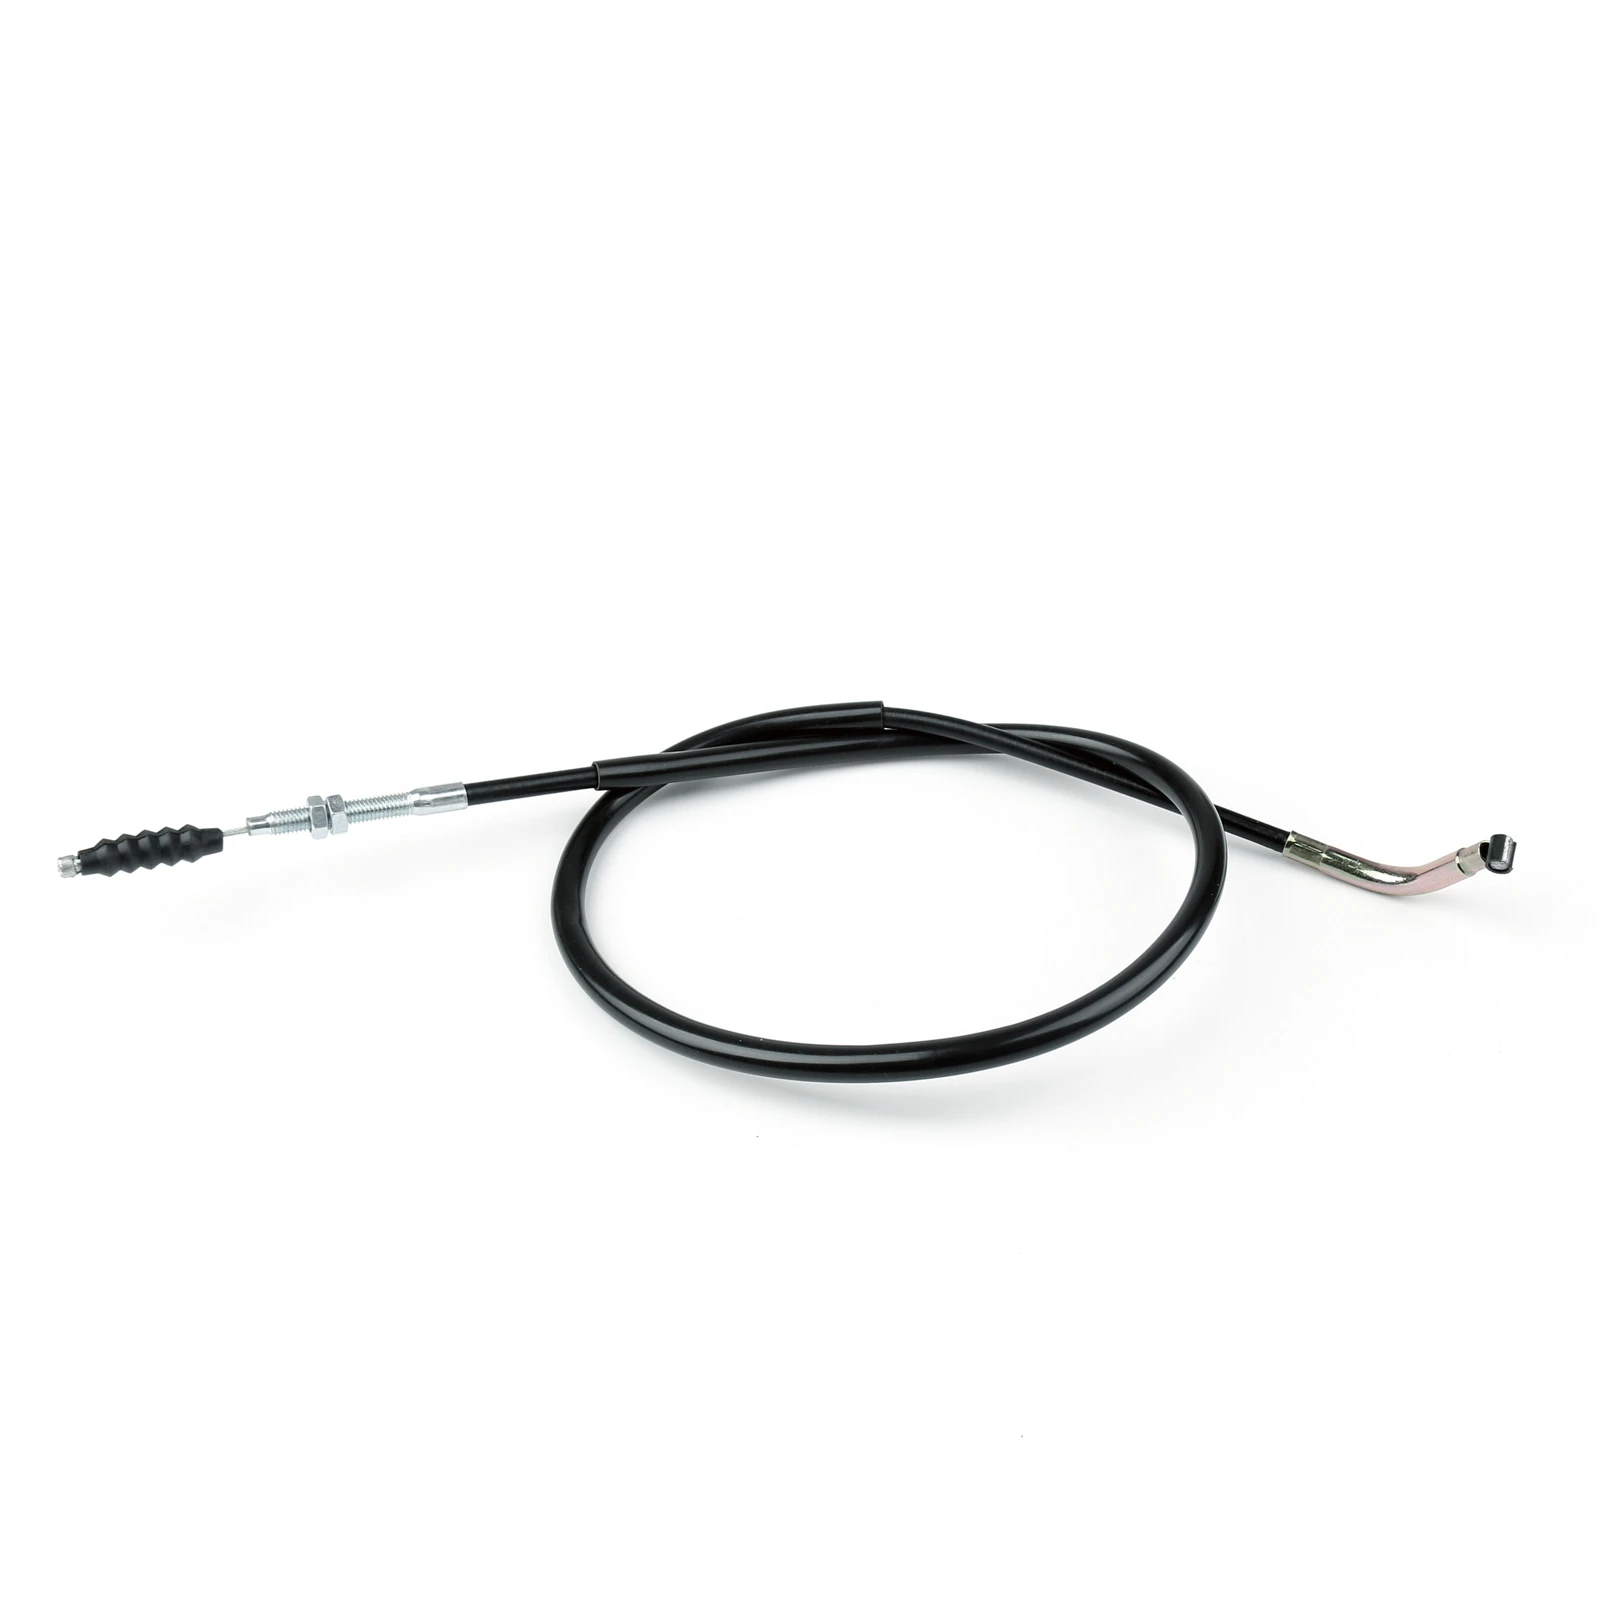 Artudatech Clutch Cable For Honda VT250 Spada/Castel 88-90 VTZ250 86-88 VTR250 MC33 98-07